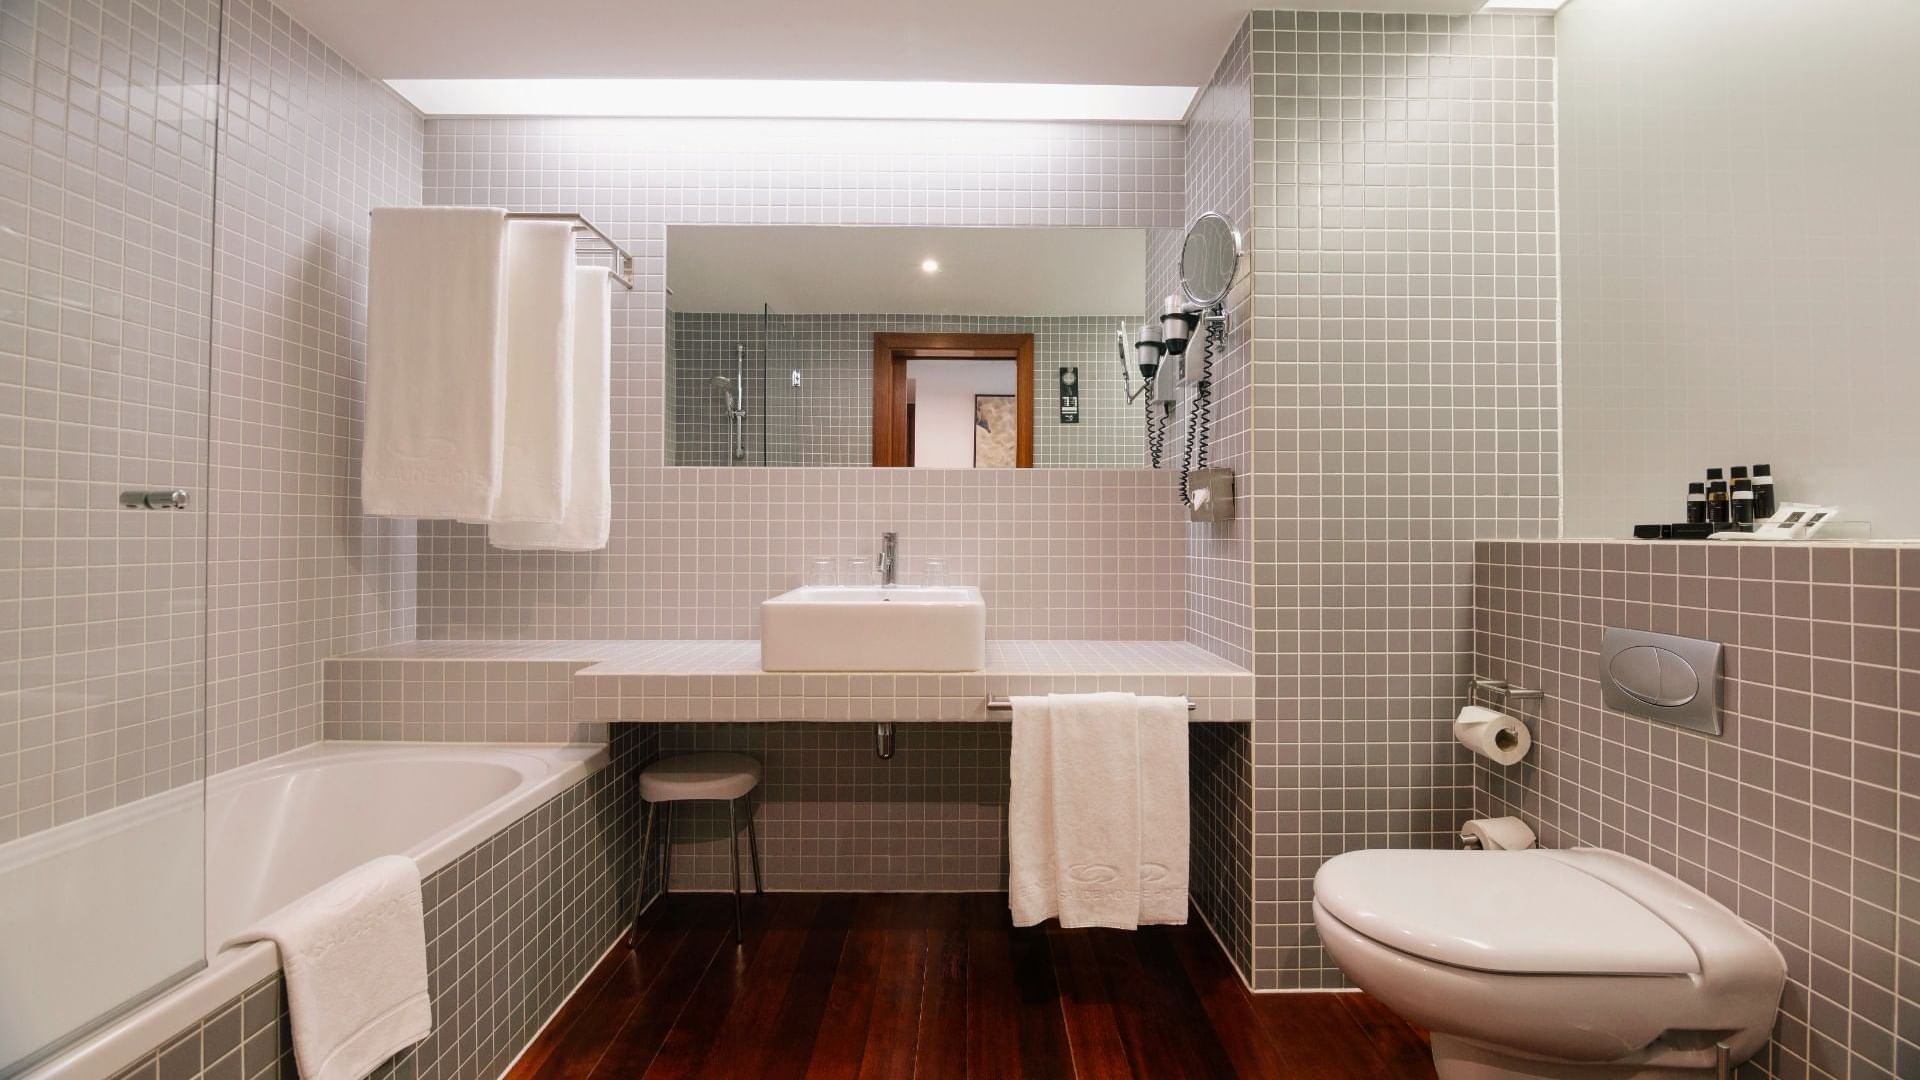 Bathroom interior, washbasin, towel rack, bathtub & mirror in Standard Room at Hotel Açores Lisboa